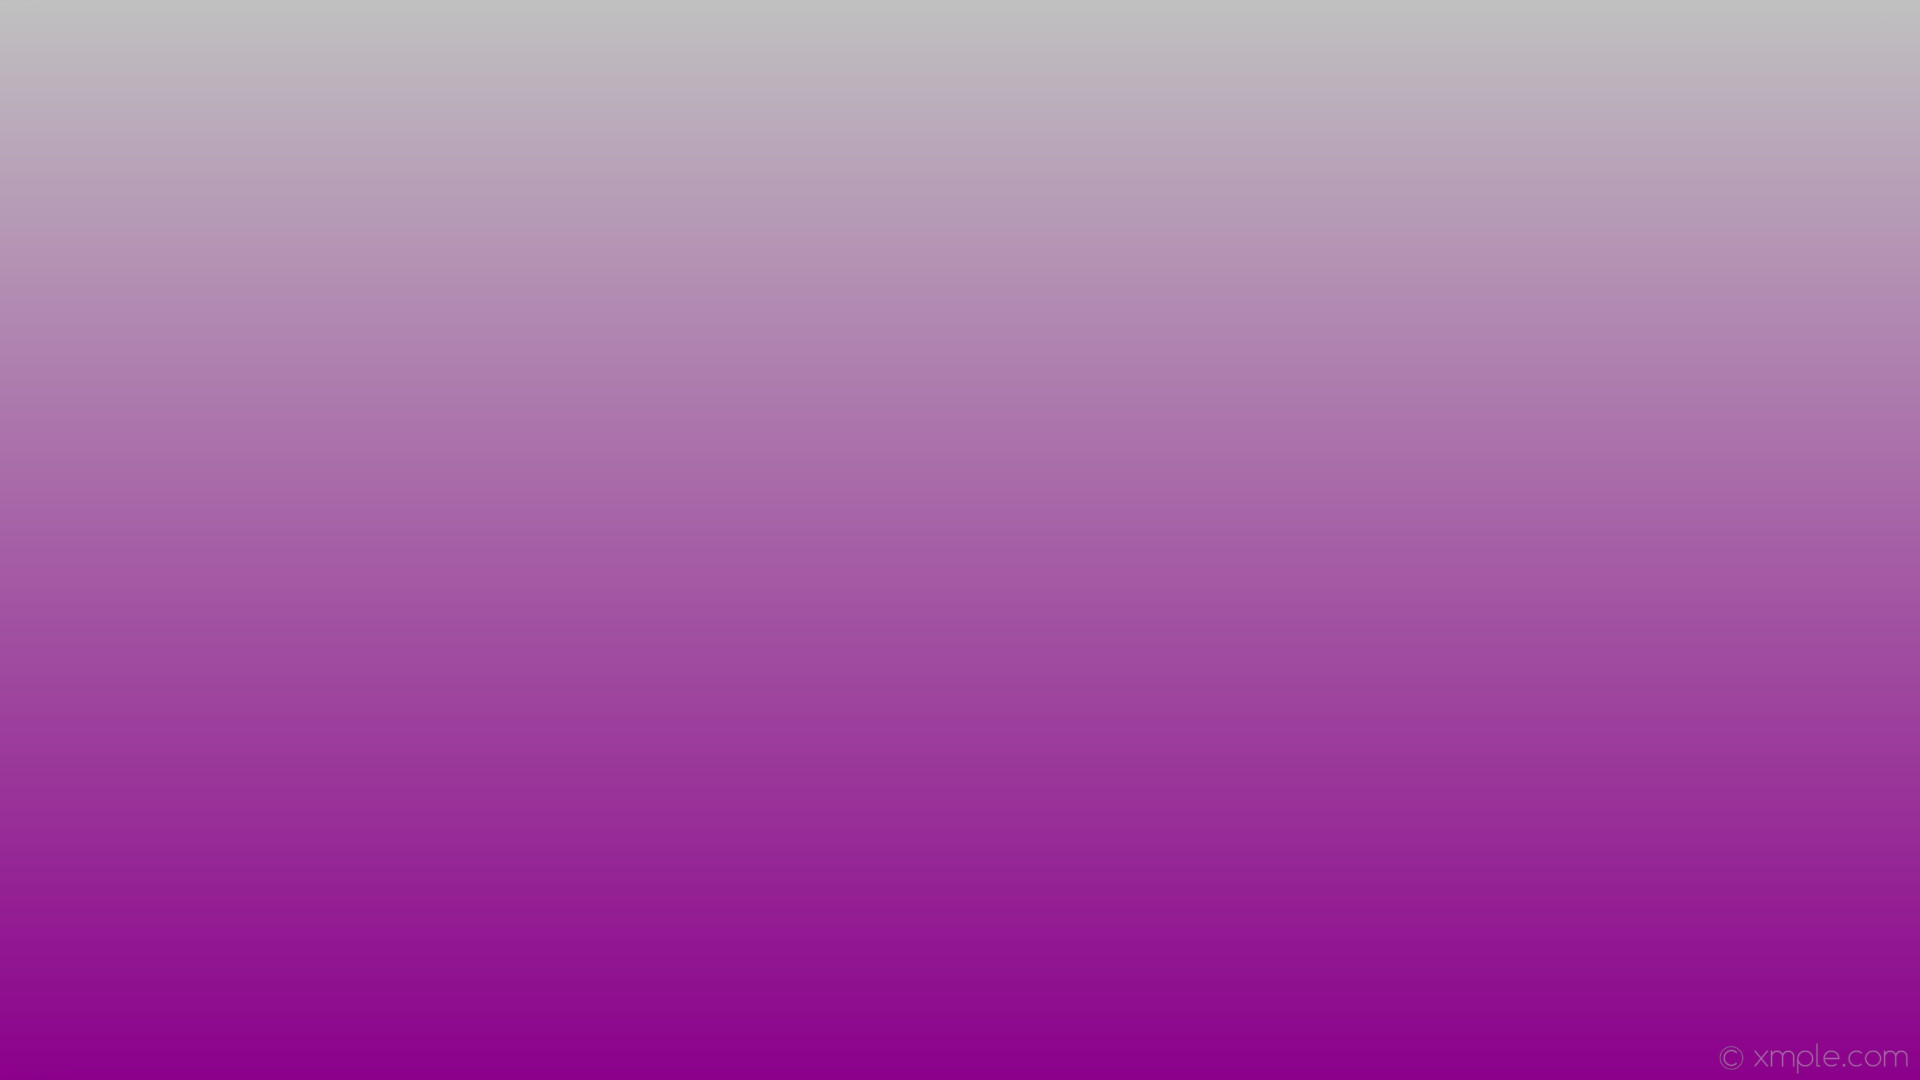 wallpaper gradient purple linear grey dark magenta silver #8b008b #c0c0c0  270Â°